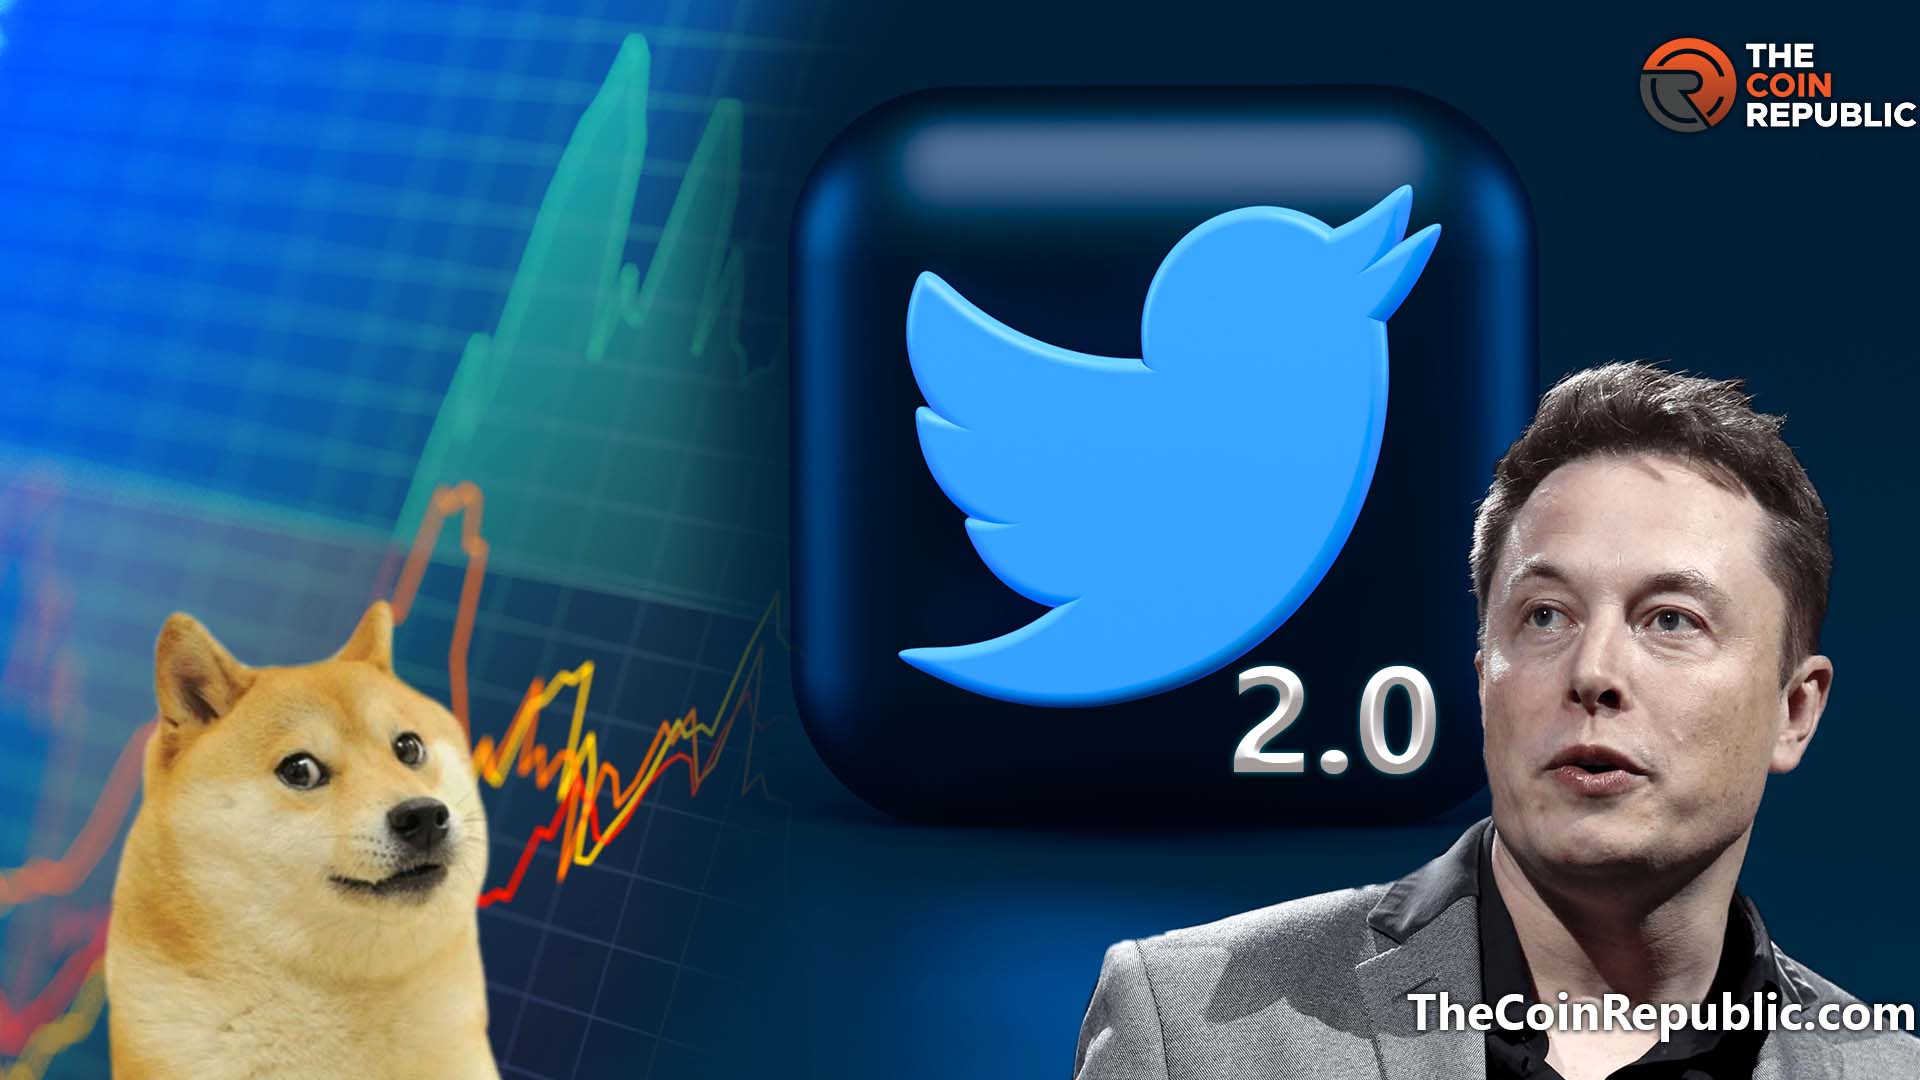 Elon Musk Brings Twitter 2.0 Update; Dogecoin Community Pumps DOGE Price